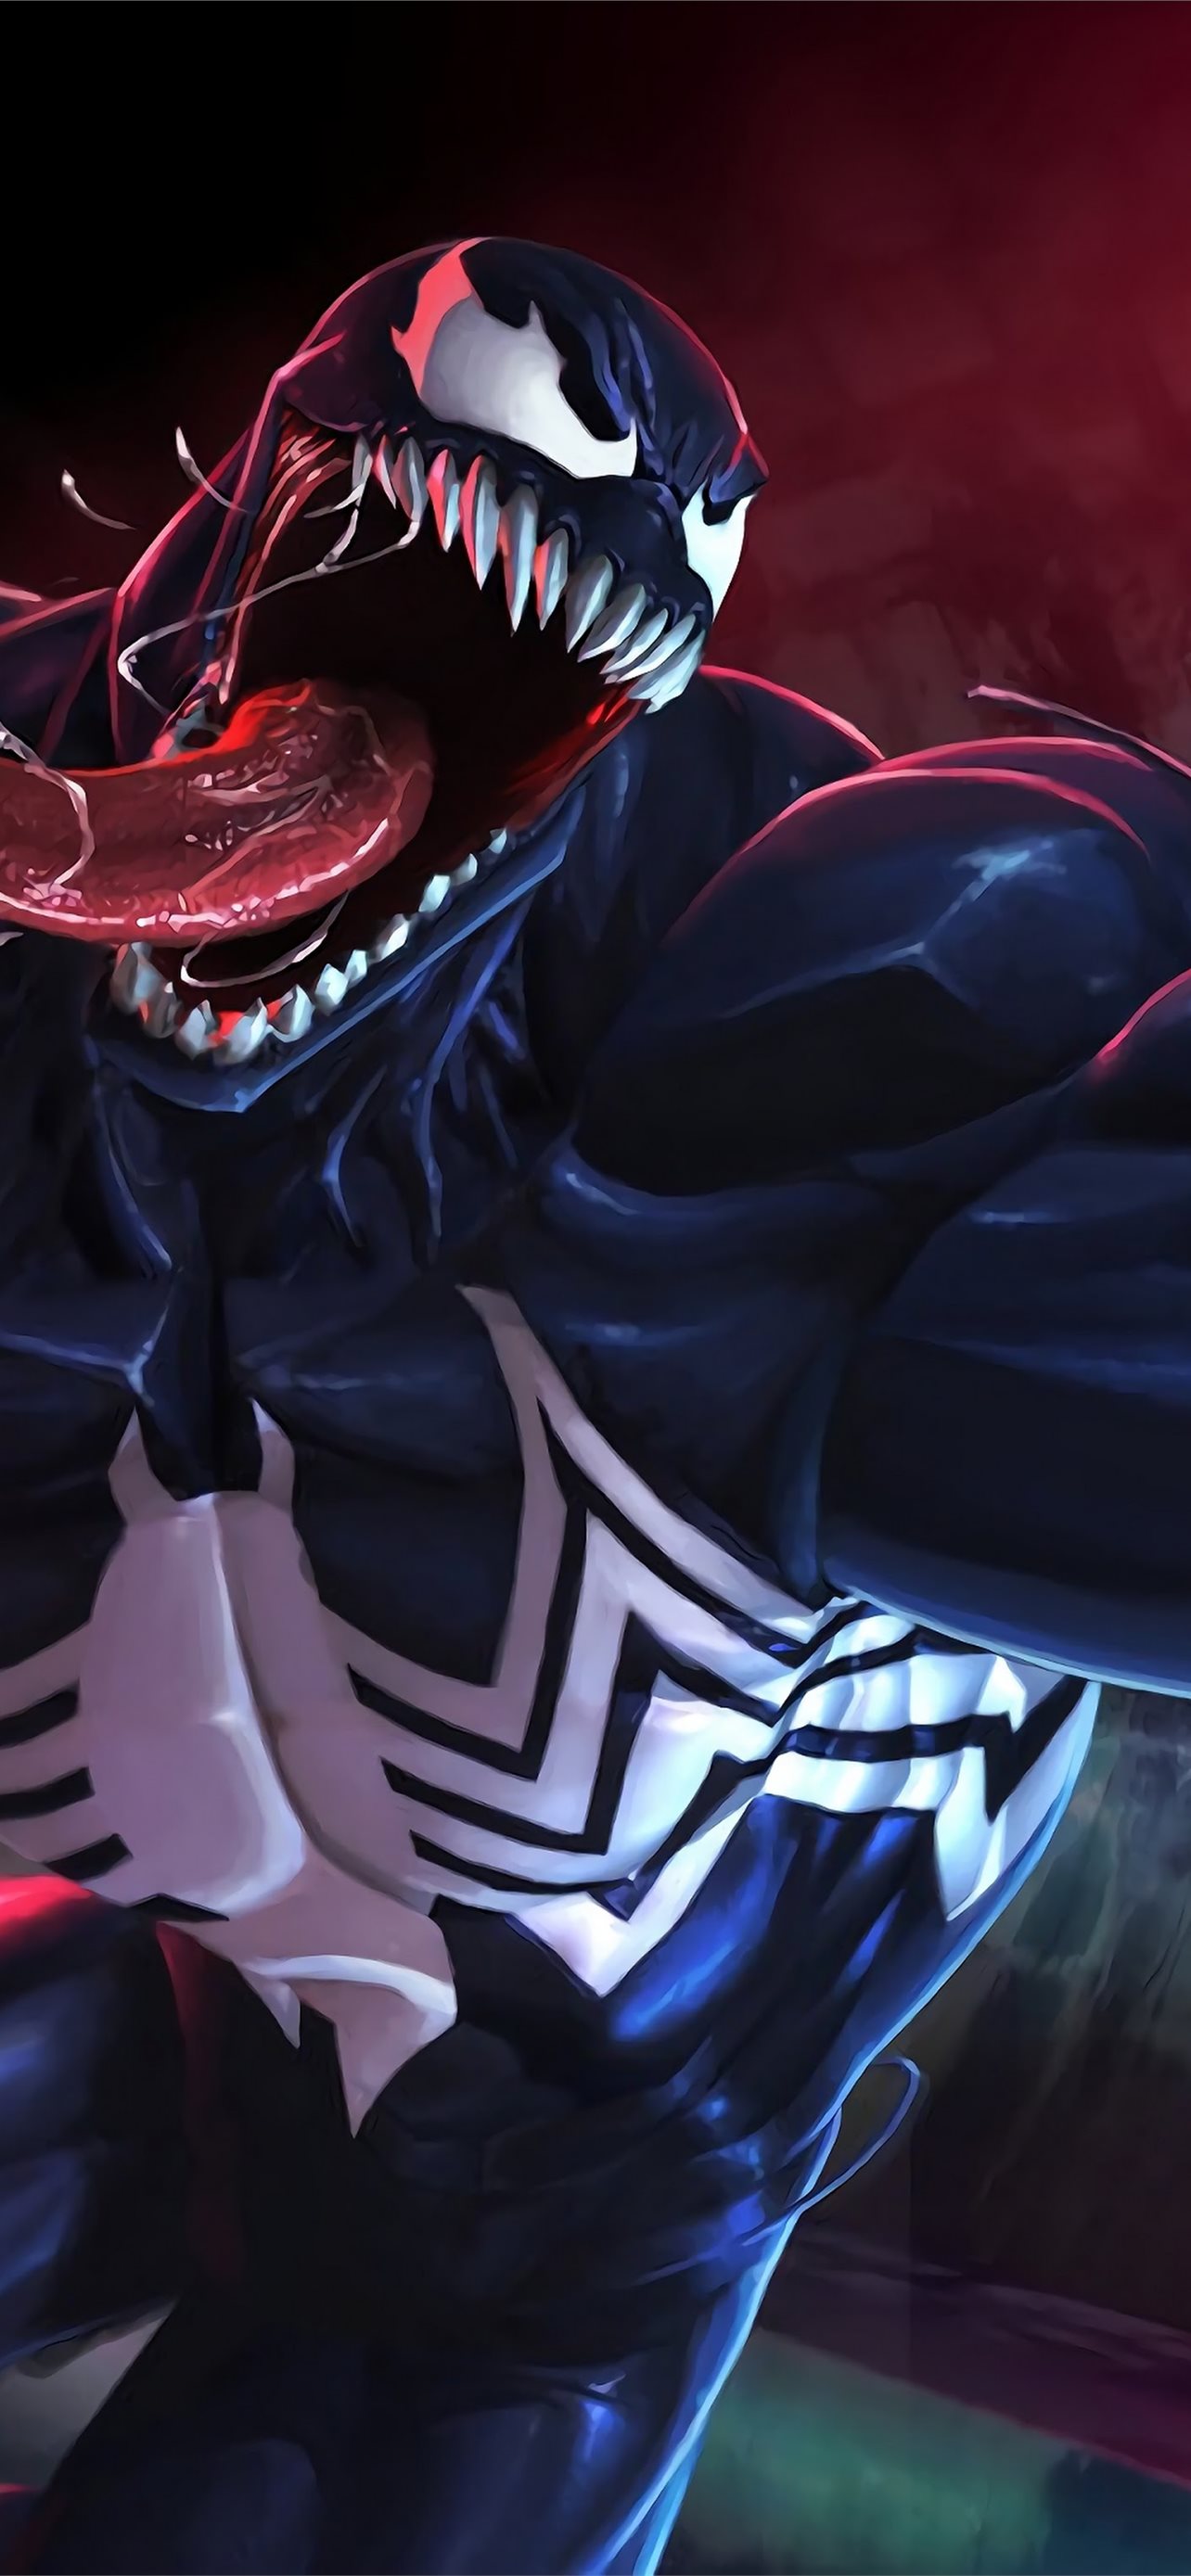 Venom 4k Marvel Contest Of Champions Venom teahub ... iPhone Wallpapers  Free Download